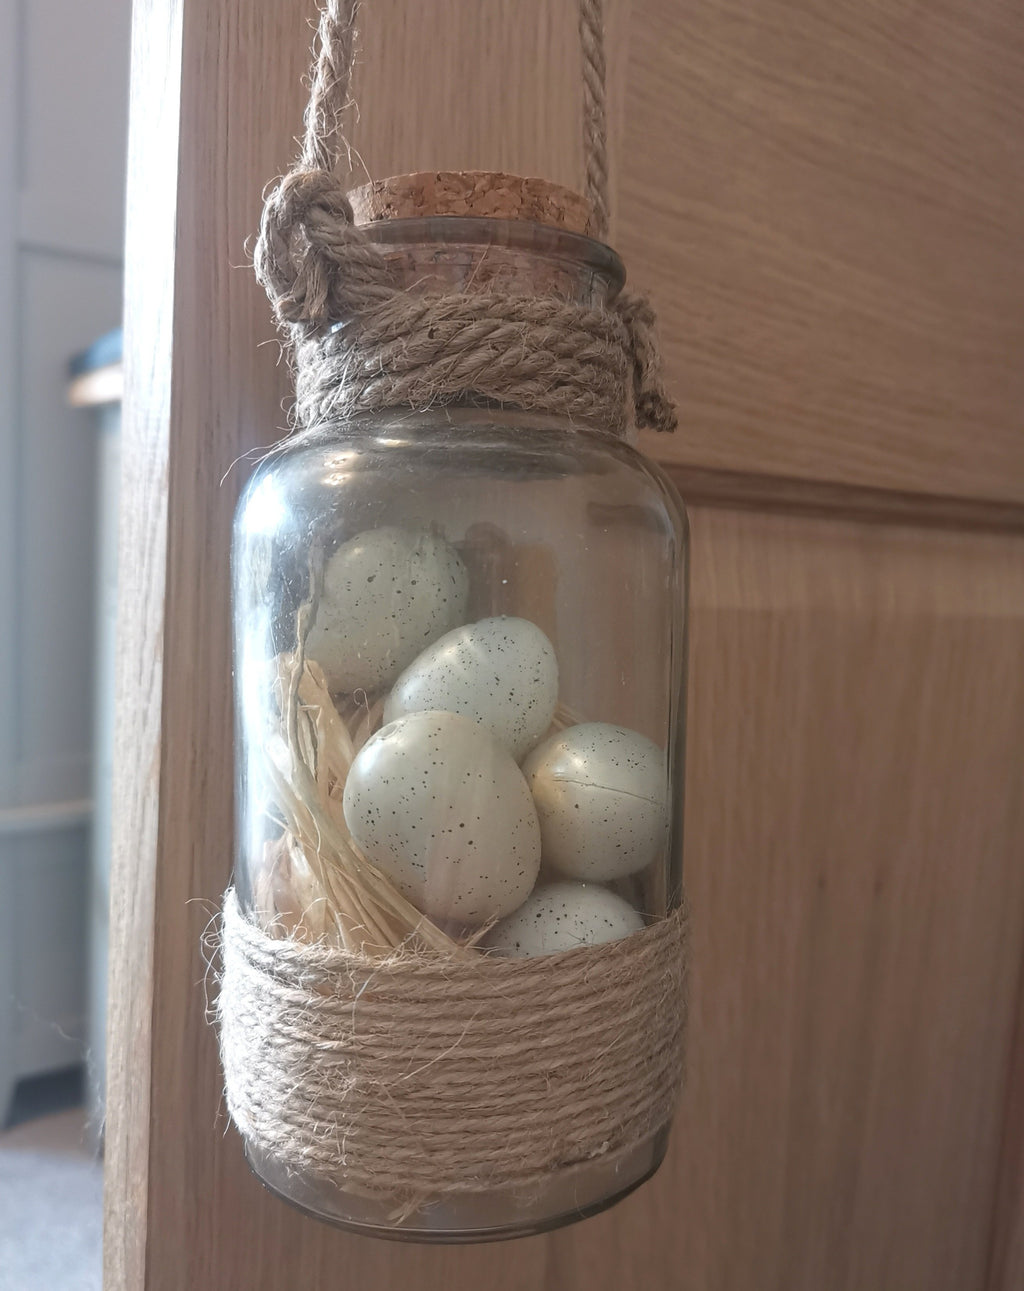 Easter Egg Jar Decor - The Burrow Interiors